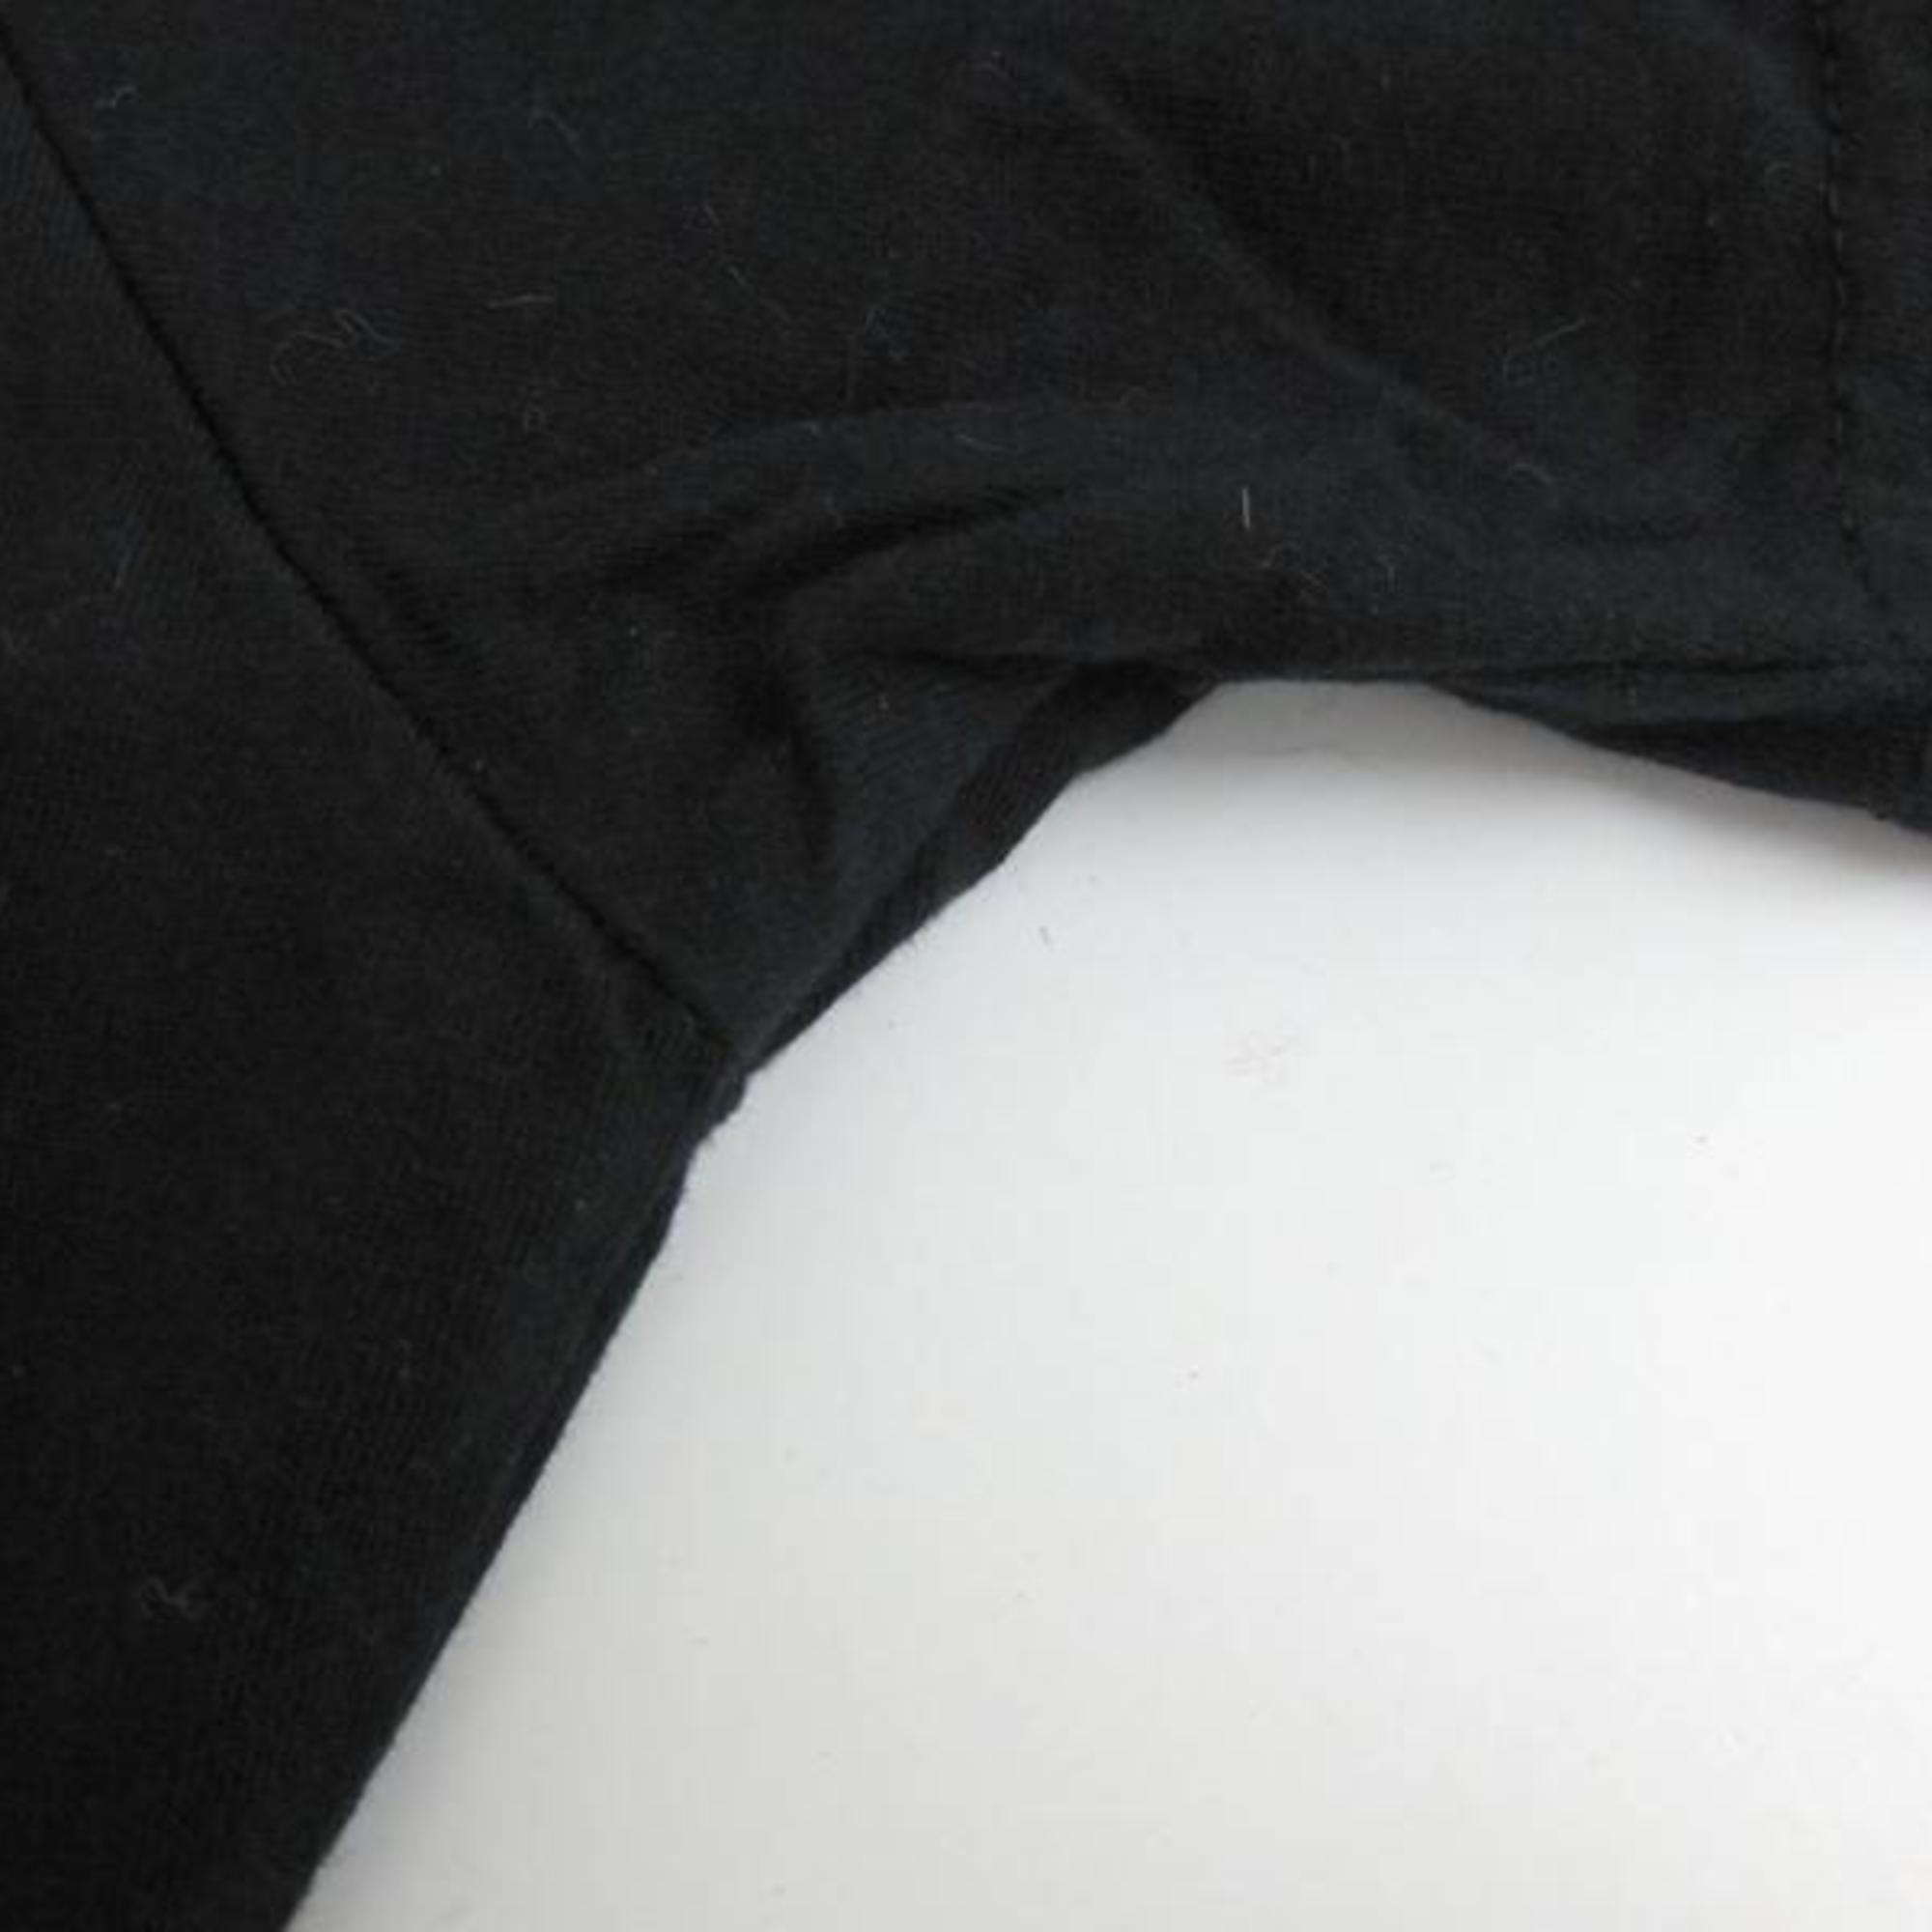 MENS BIGI Short Sleeve T-shirt Cotton Black 02